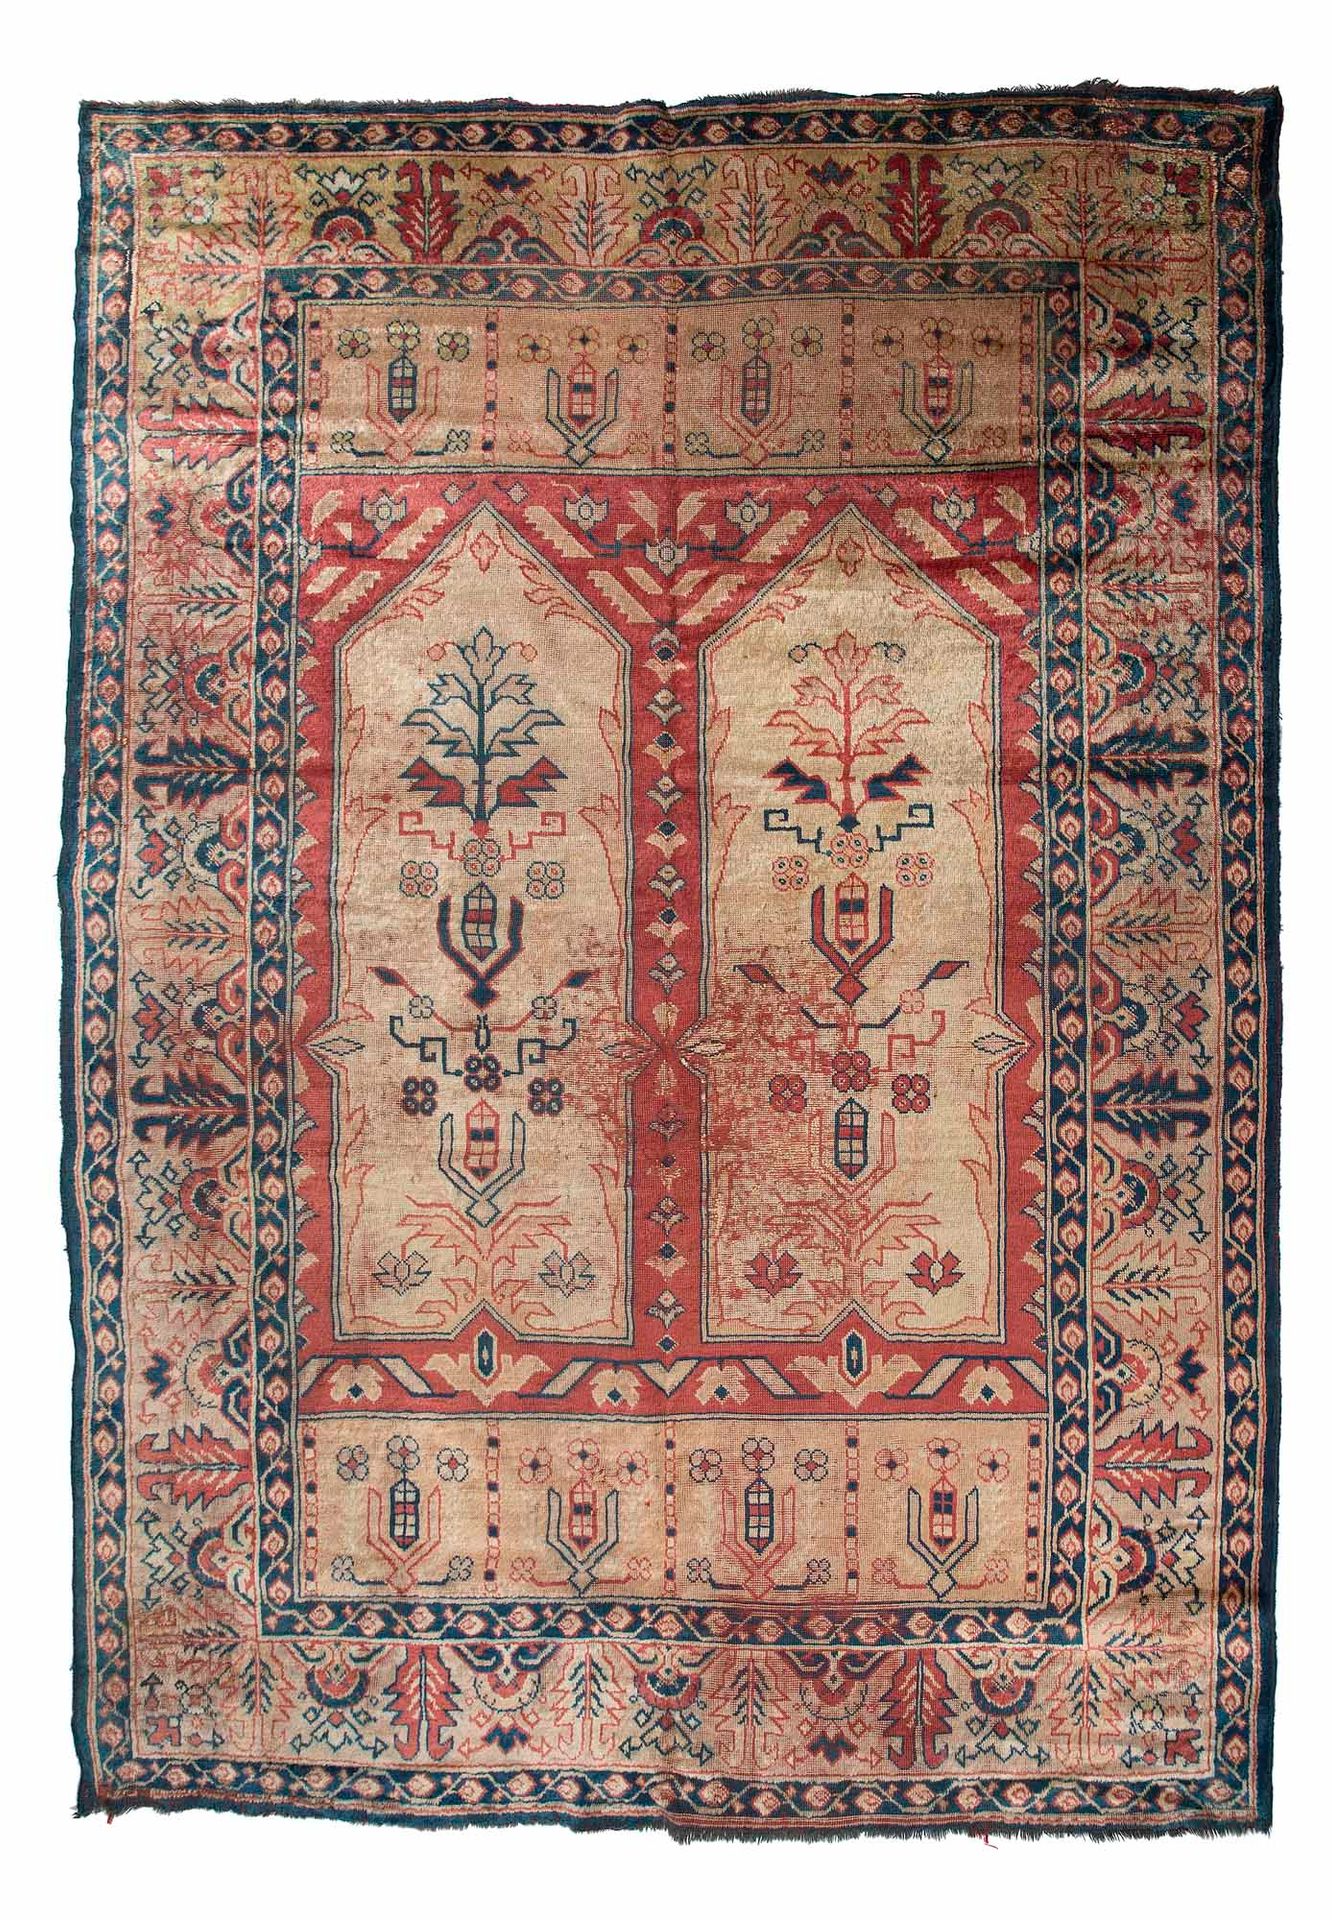 Null Rare tapis TIF-TIK (Asie Mineure), fin du 19e siècle

Dimensions : 335 x 22&hellip;